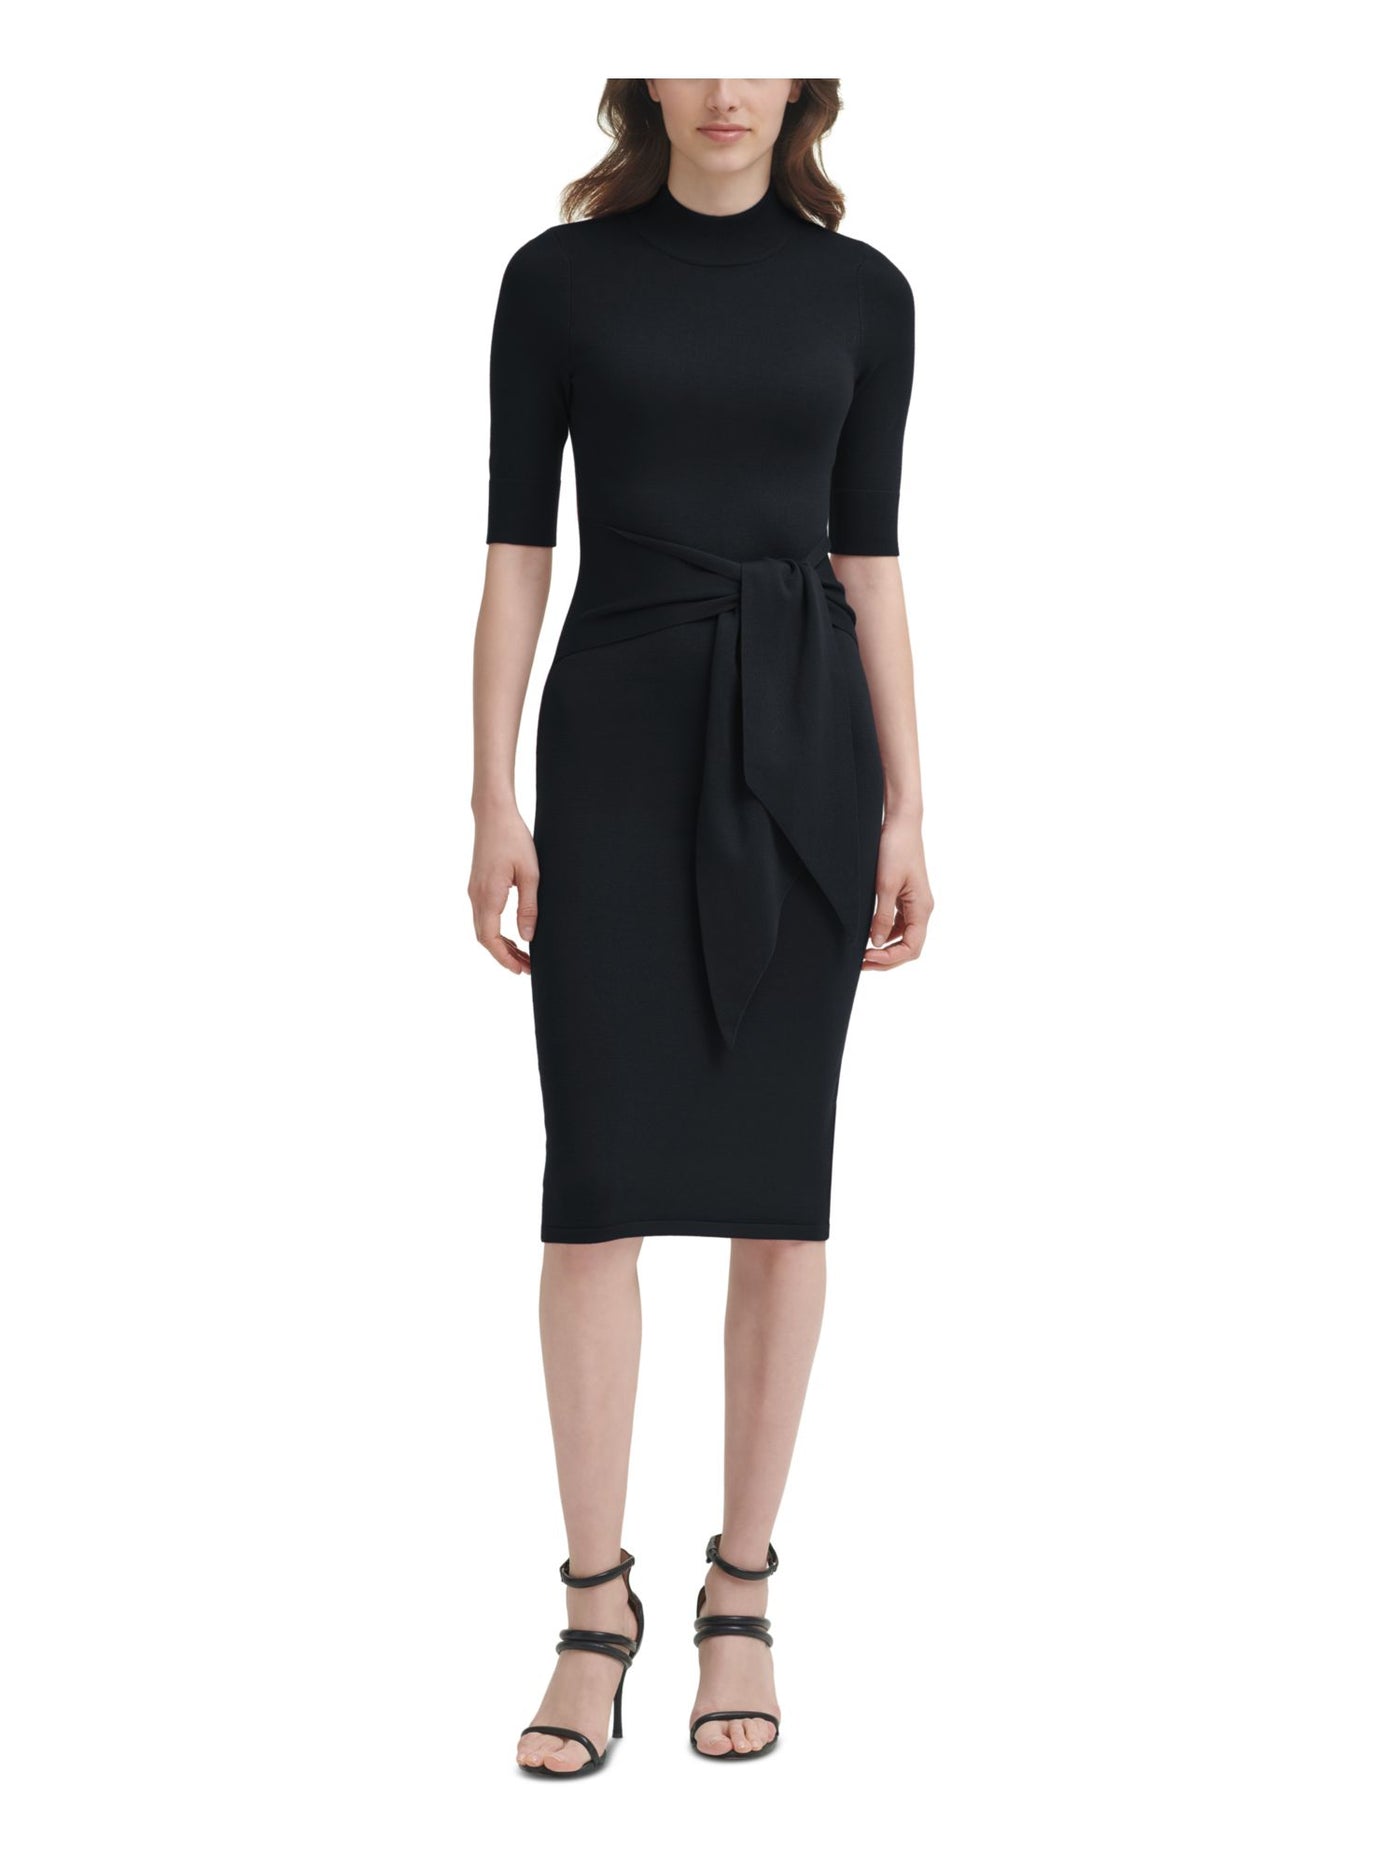 DKNY Womens Black Knit Elbow Sleeve Mock Neck Knee Length Sweater Dress XL